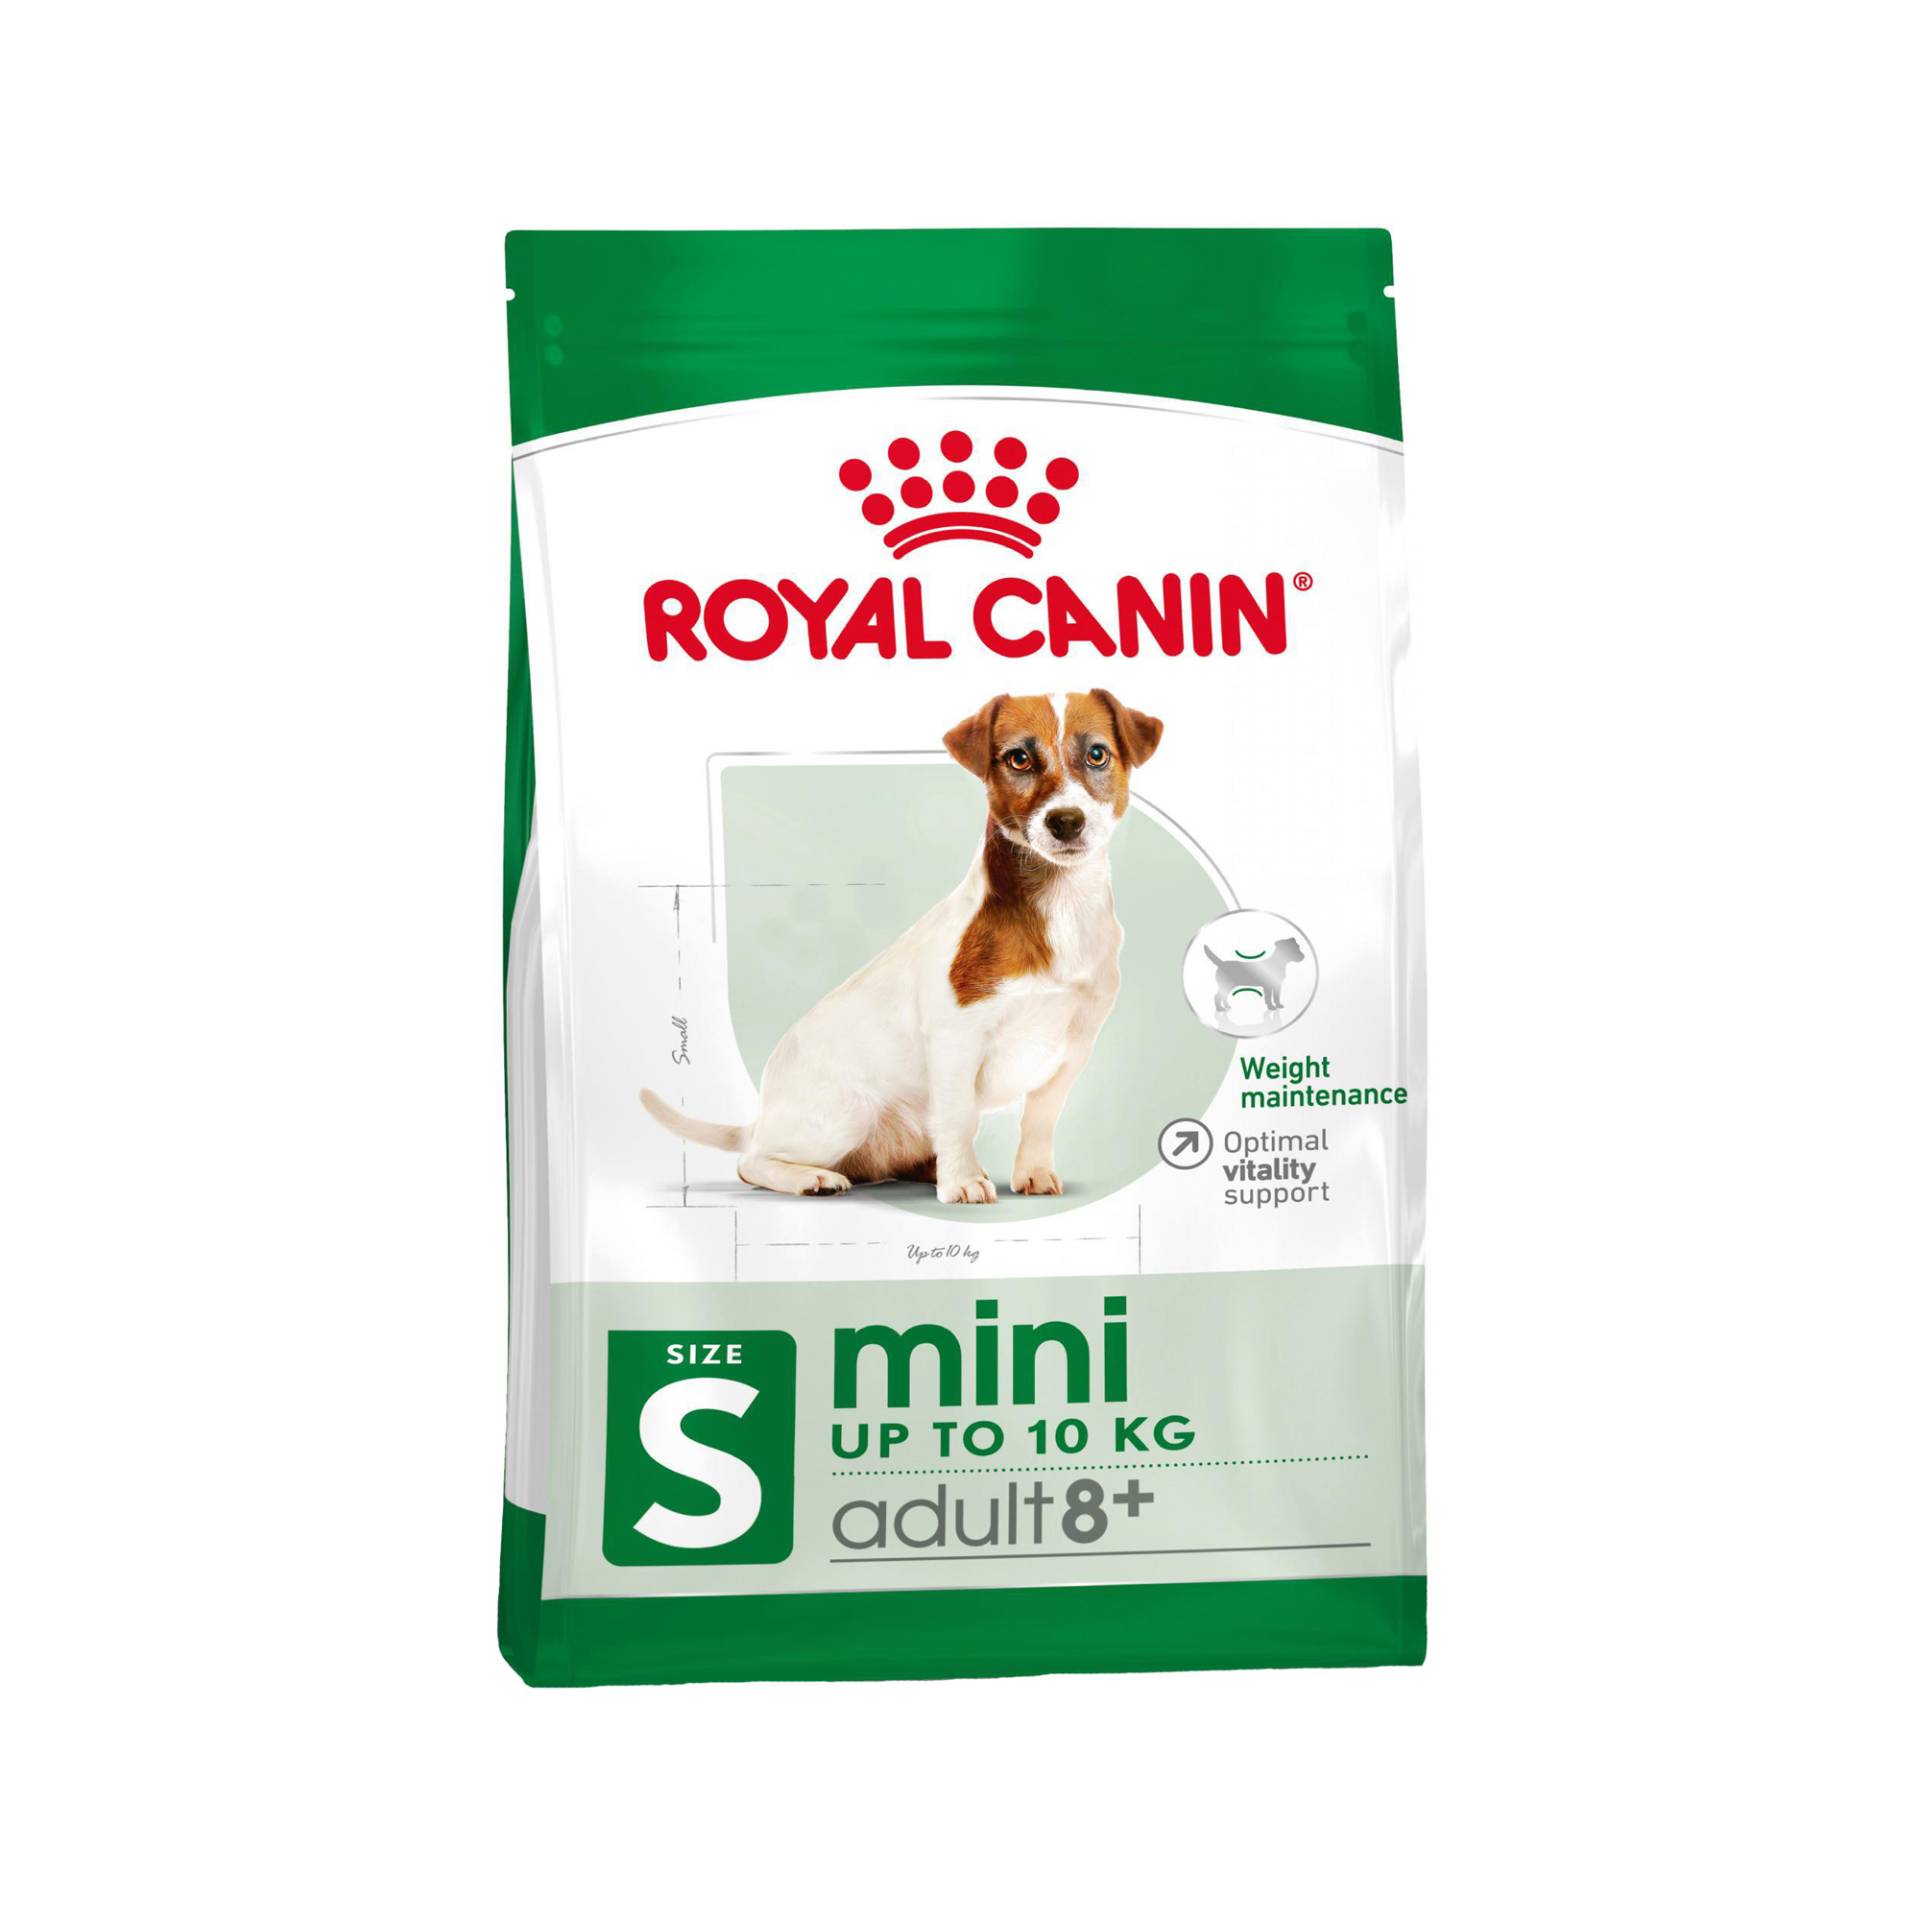 Royal Canin Mini Adult 8+ - 4 kg von Royal Canin